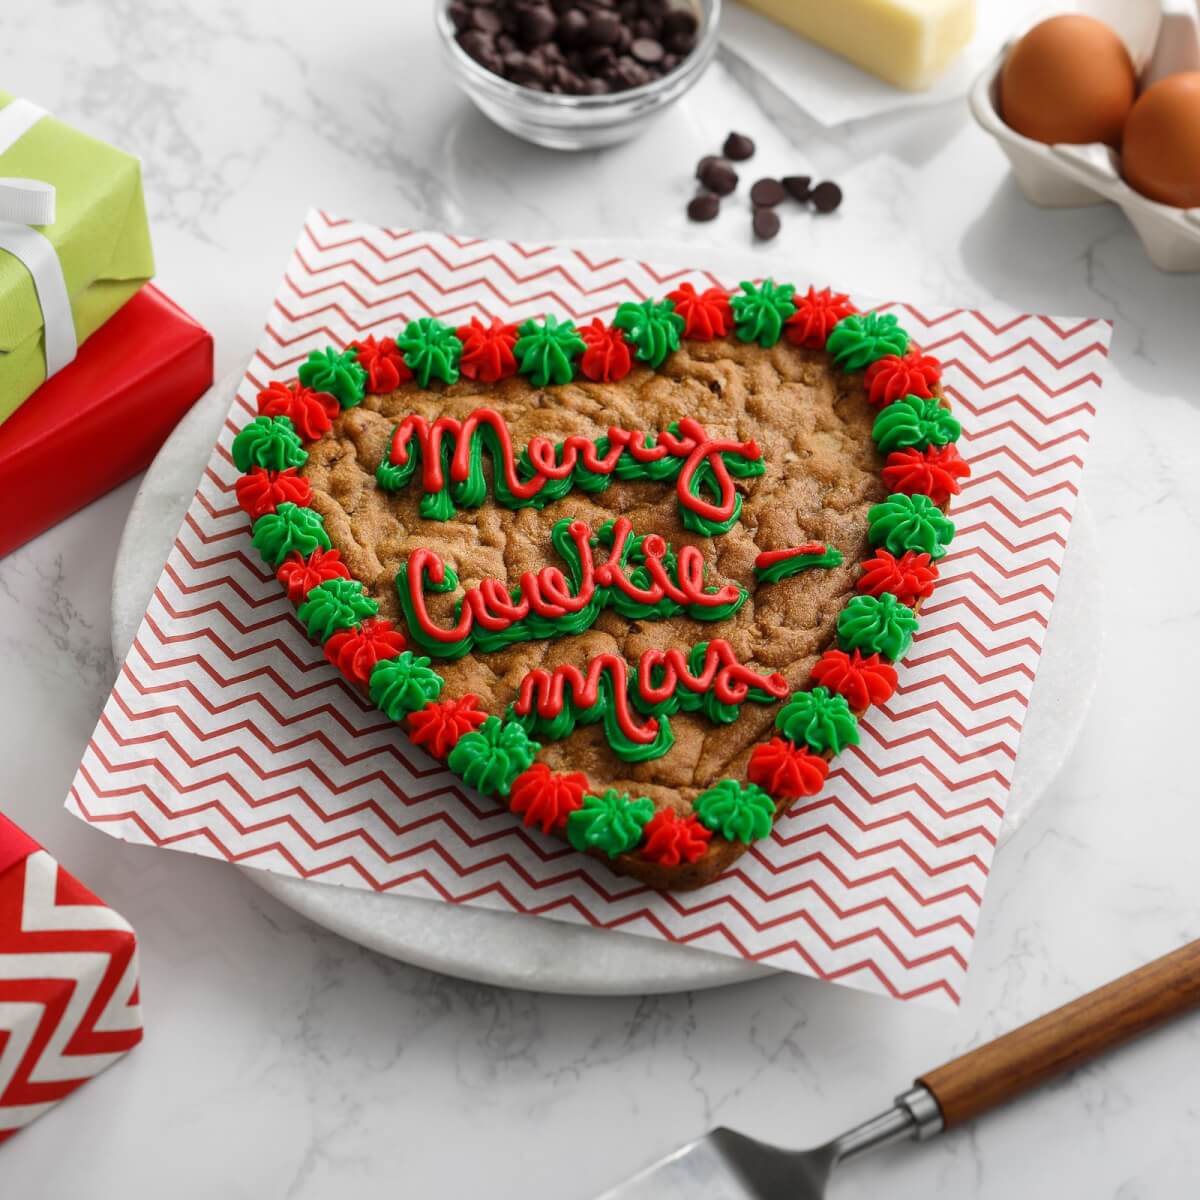 Merry Cookie-Mas custom heart-shaped cookie cakes